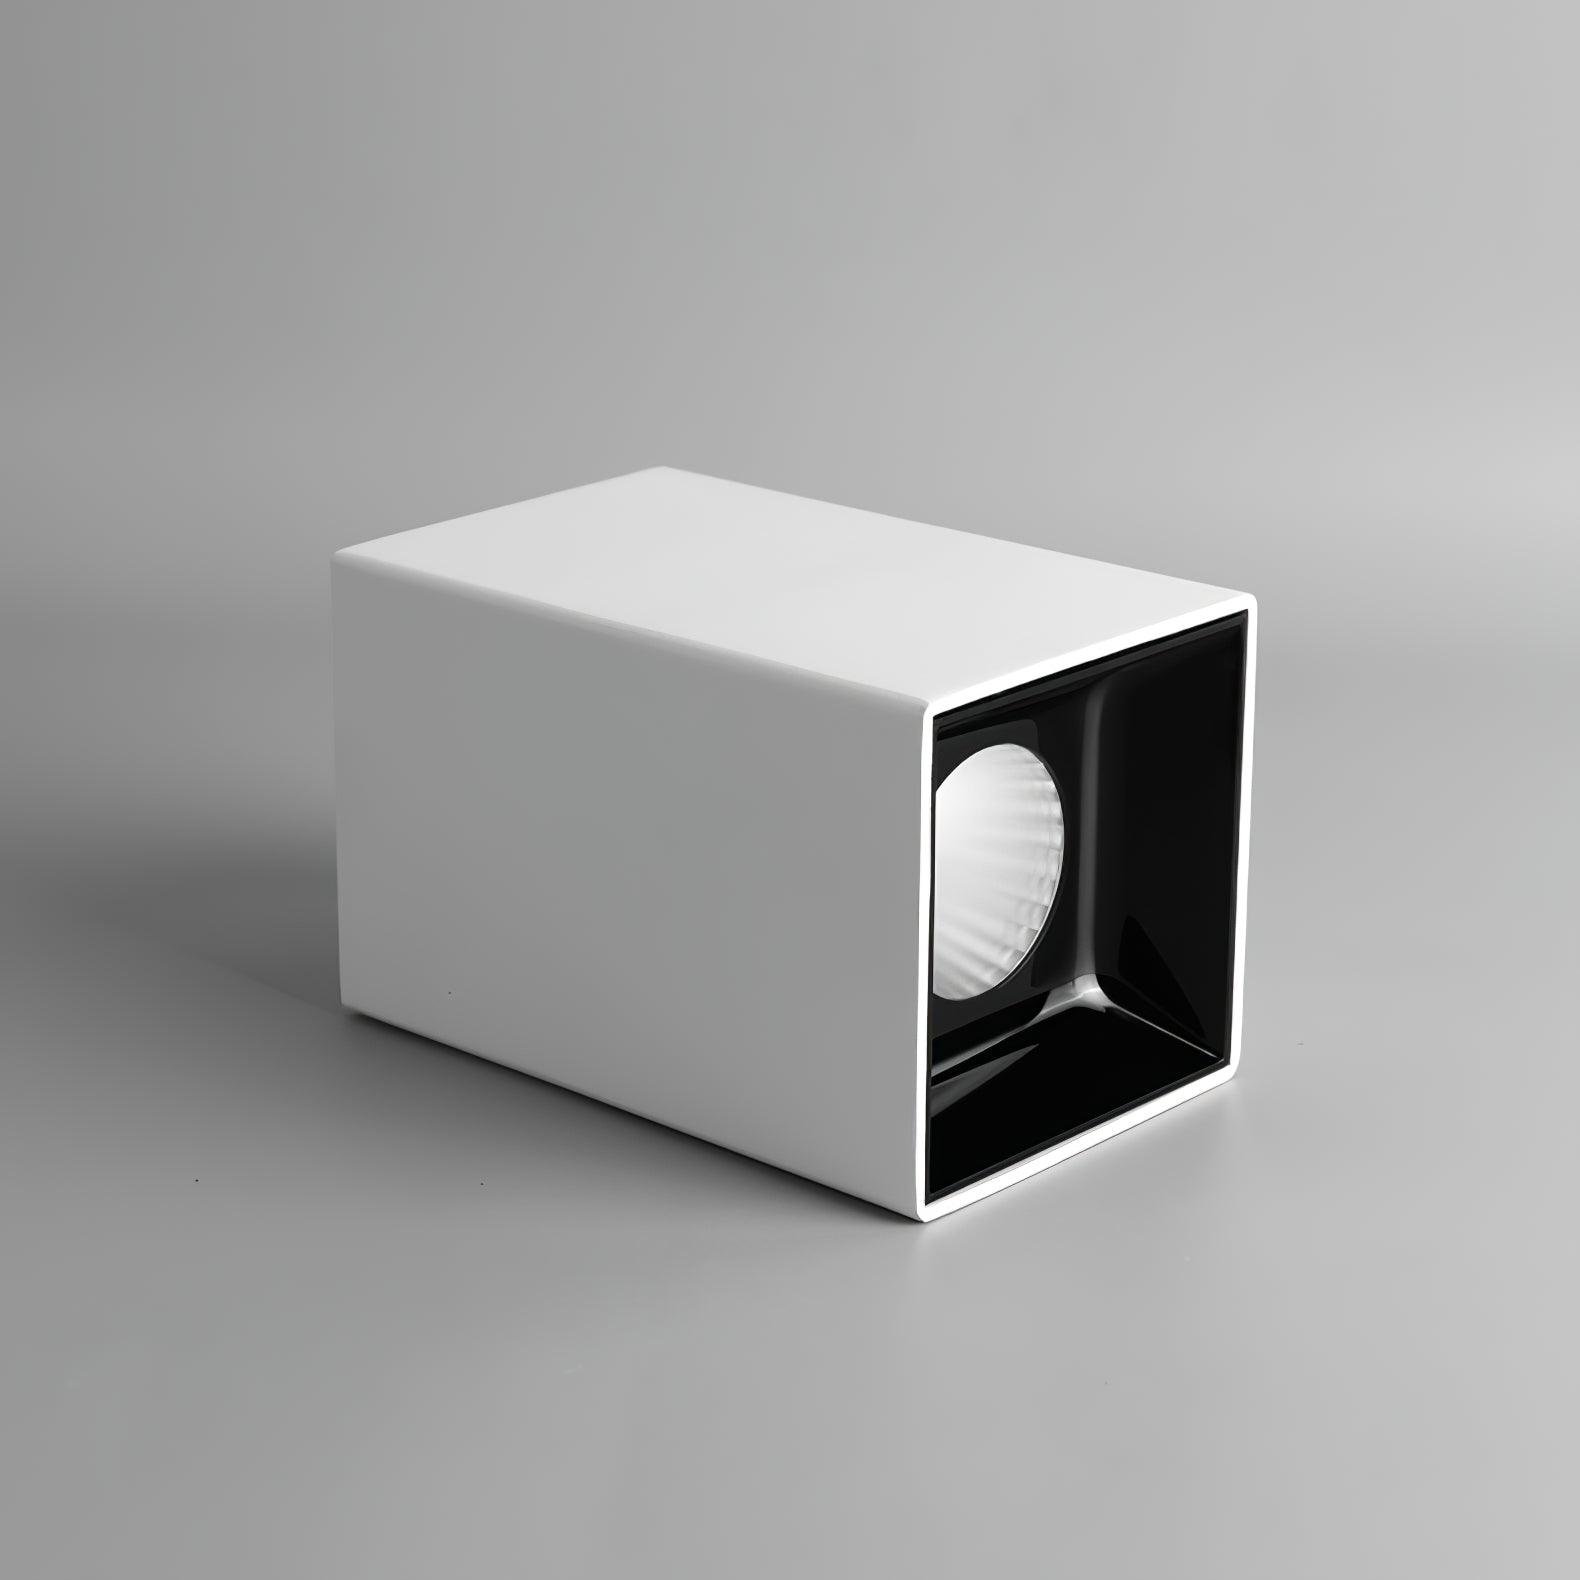 Ten-Piece Set of 4.5" Diameter, 4.3" Height White Cube Spotlights with Cool Light